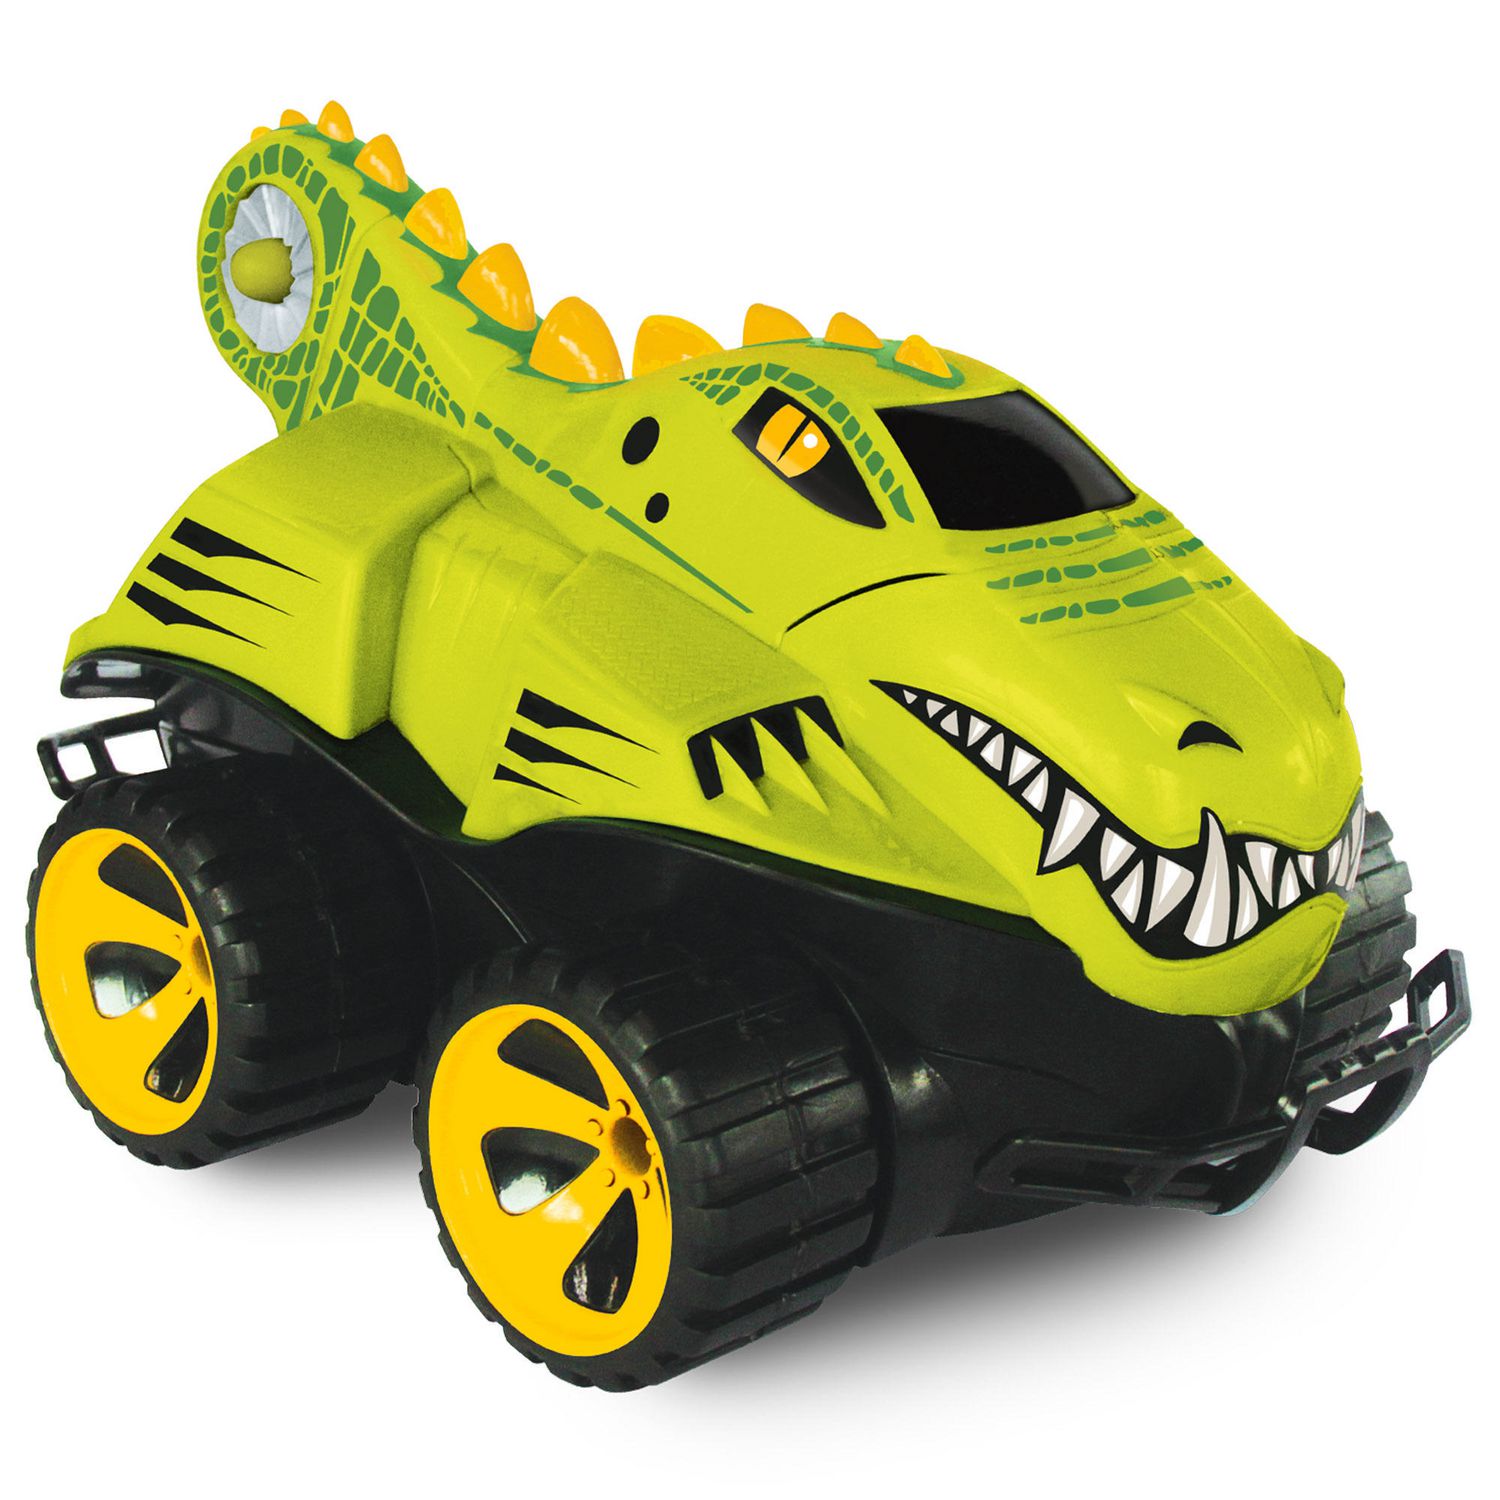 amphibious remote control crocodile car